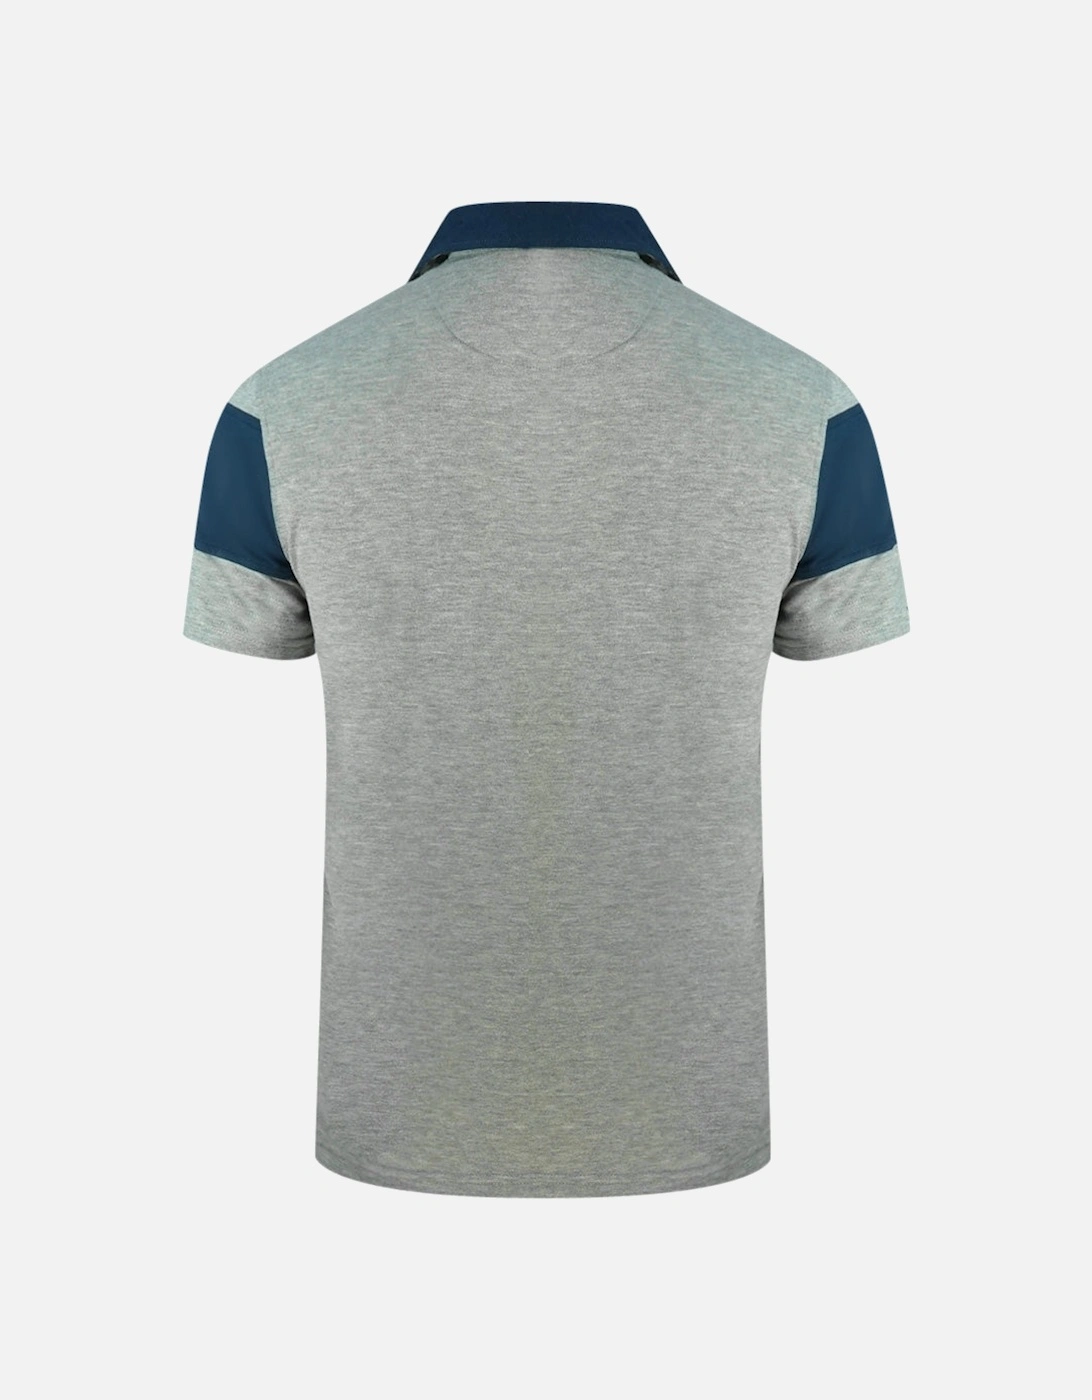 Colour Block Aldis Crest Chest Logo Grey Polo Shirt